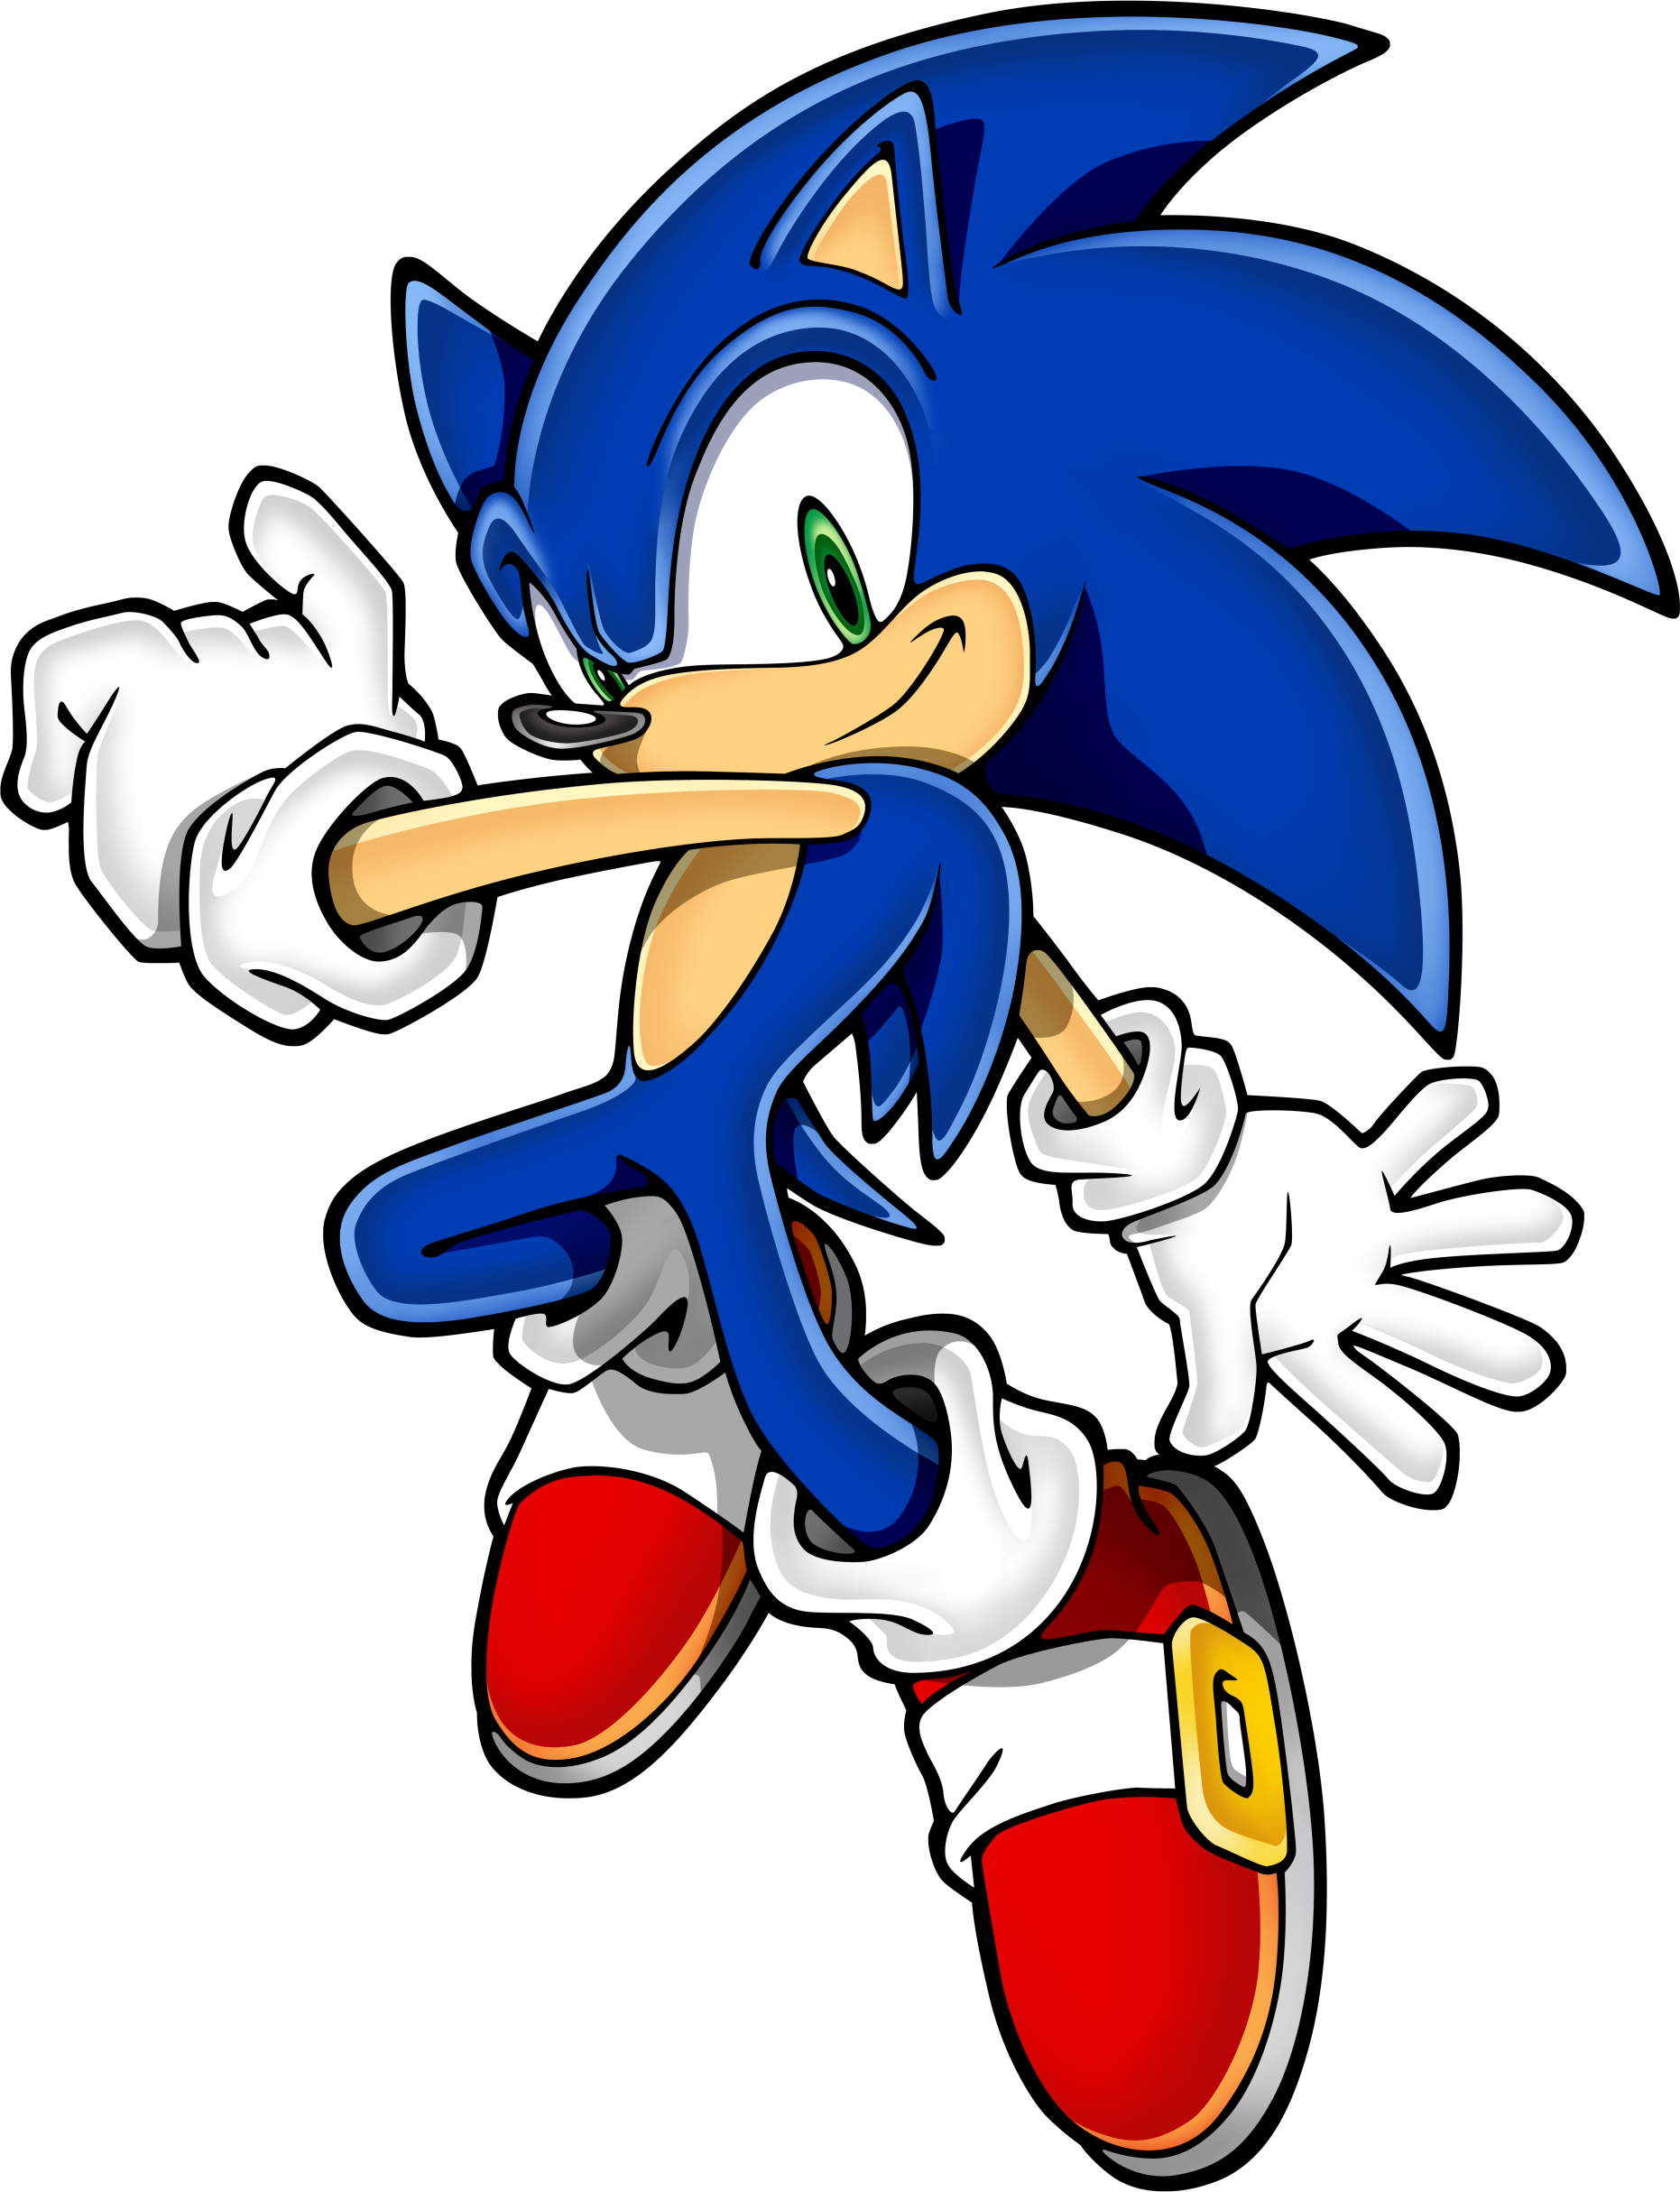 Sonic Art Assets DVD - Sonic The Hedgehog - 7.png